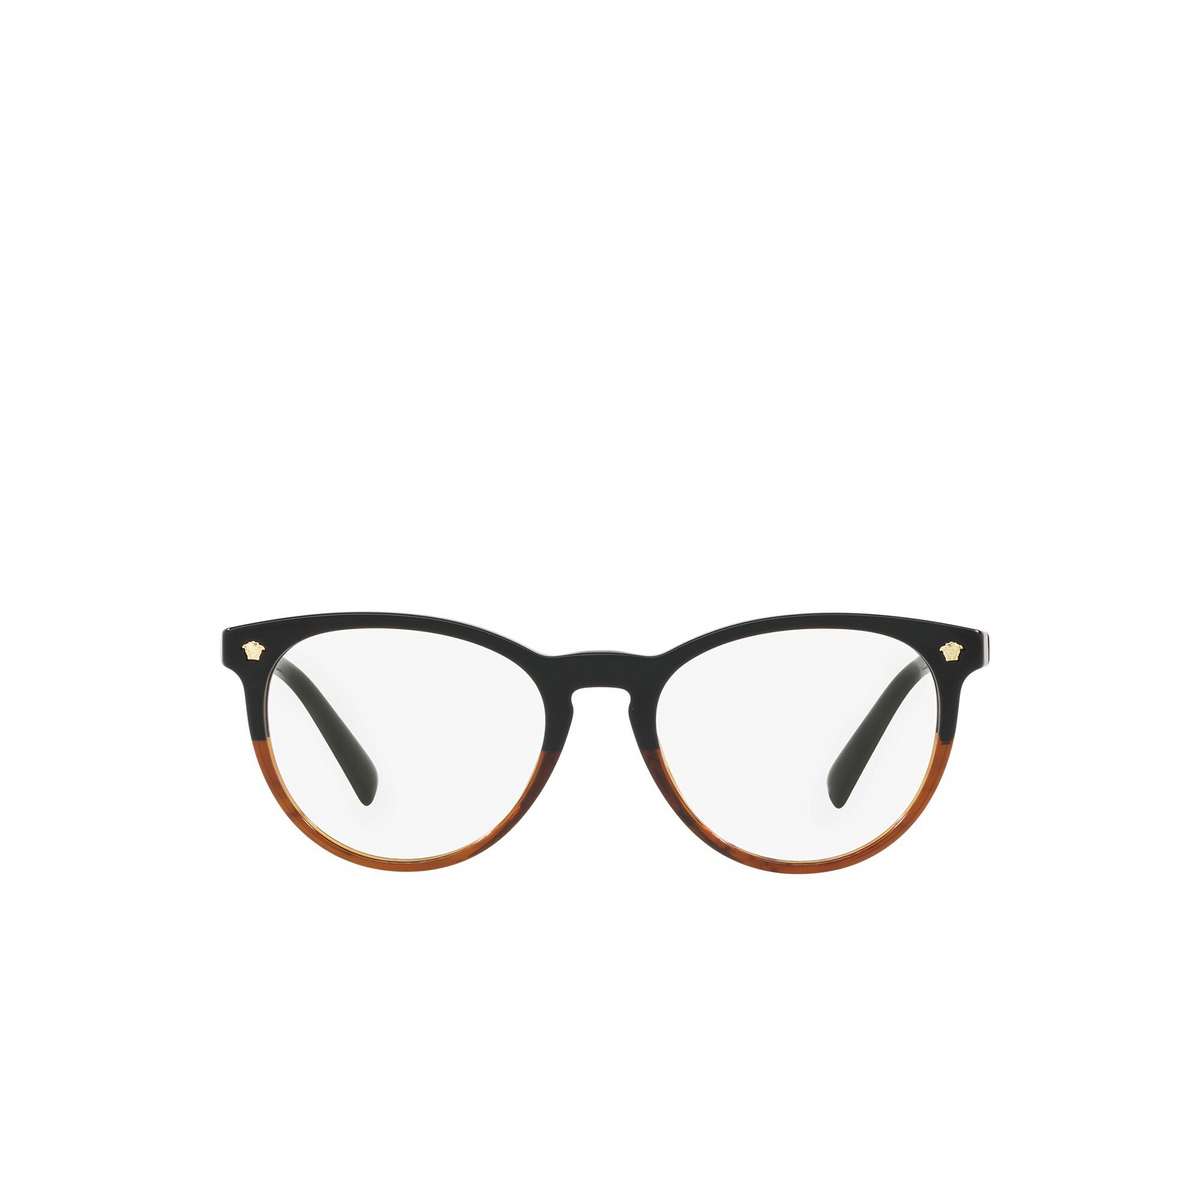 Versace® Round Eyeglasses: VE3257 color Black / Havana 5117 - front view.